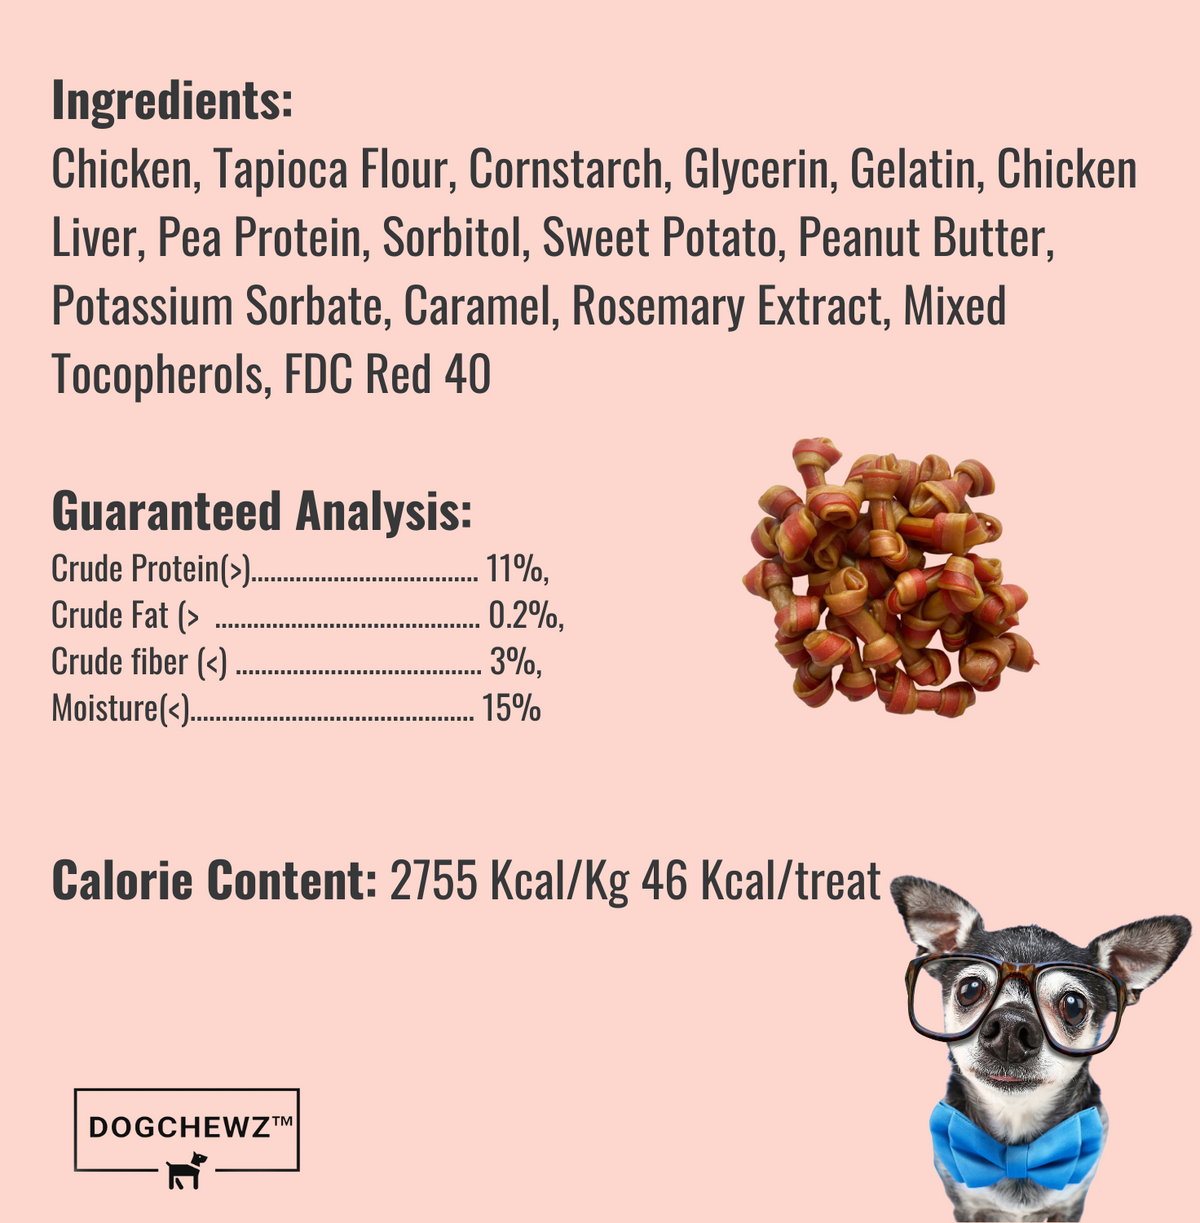 DOGCHEWZ™ Rawhide Free Knotted Bone Peanut Butter Small Dog Chew Treats 2.5" (24 Ct/Bag) - Chicken Flavor